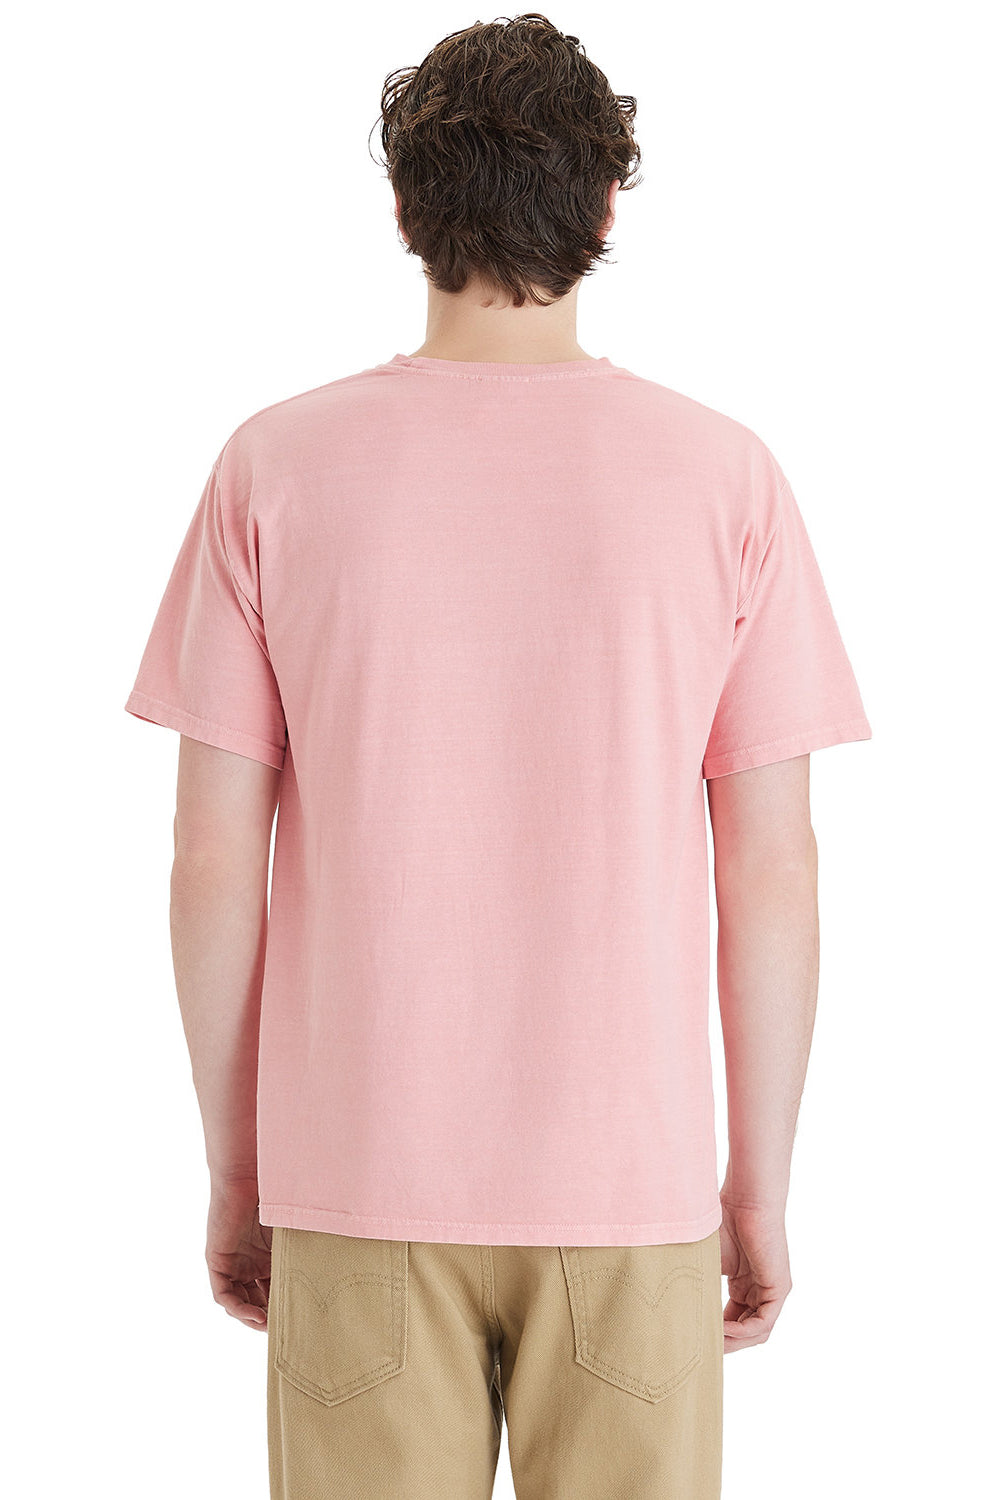 ComfortWash By Hanes GDH11B Mens Botanical Dyed Short Sleeve Crewneck T-Shirt Botanical Rubia Model Back